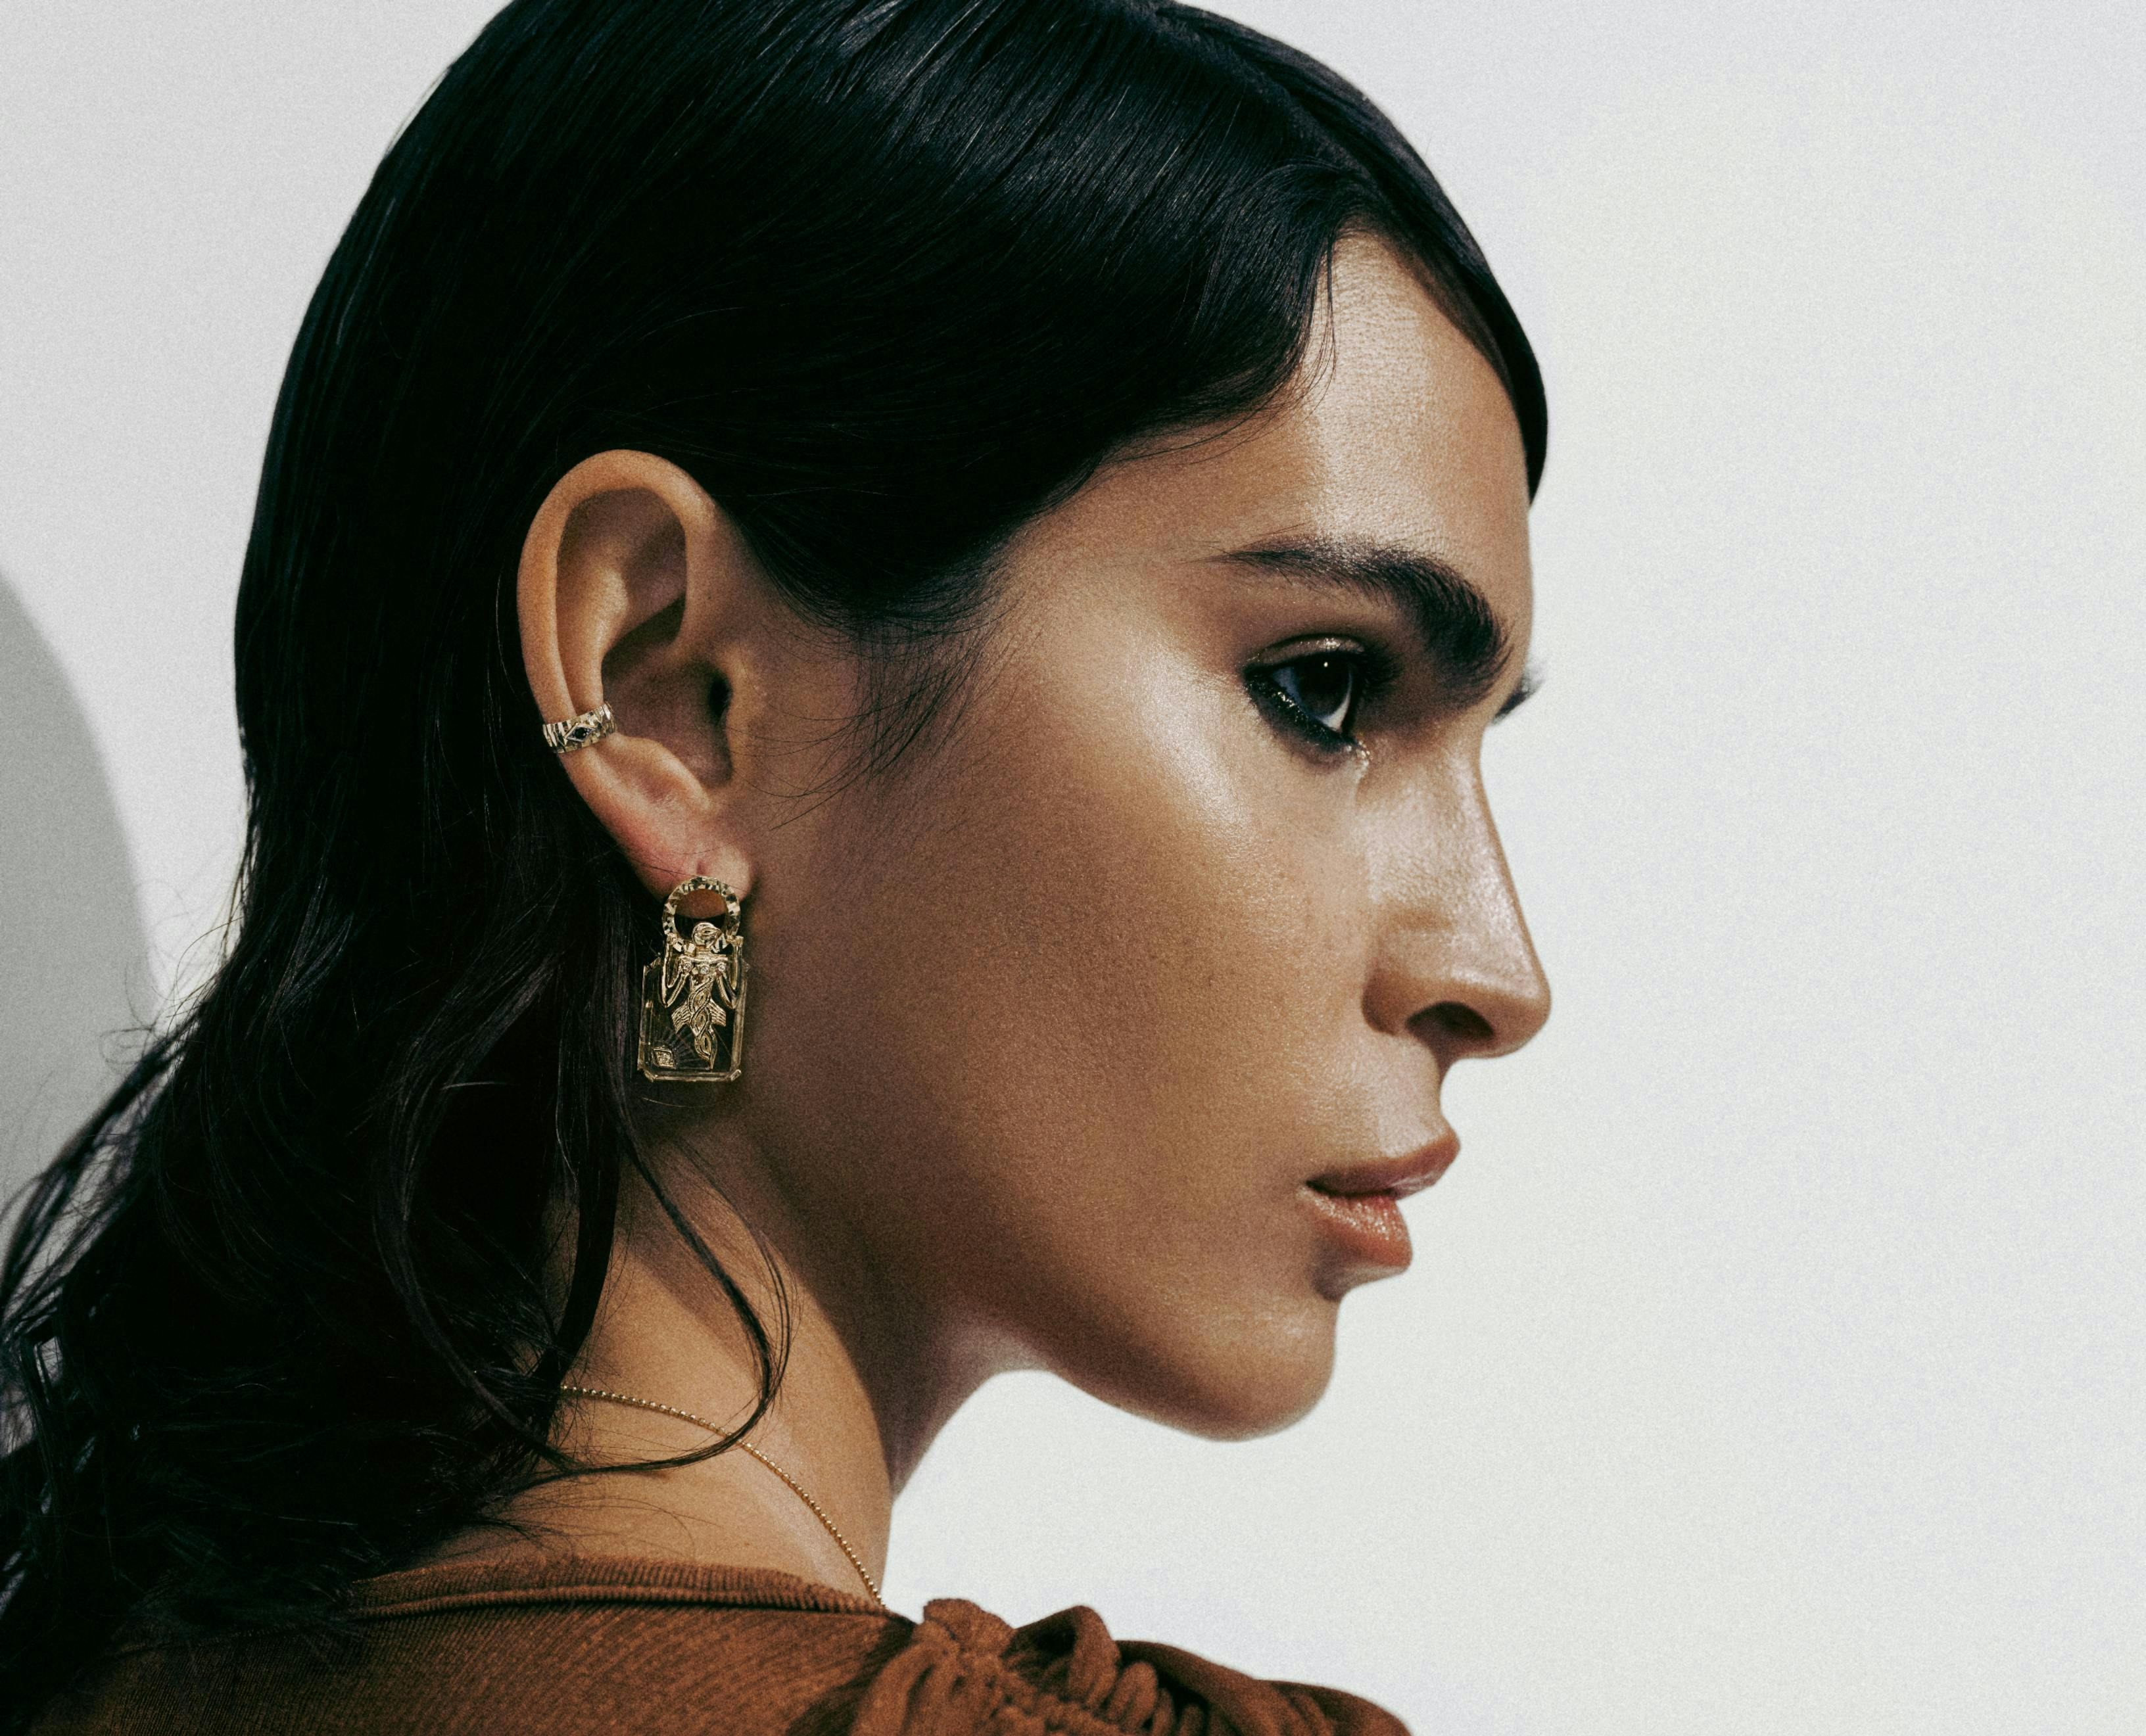 accessories earring adult female person woman face head portrait neck